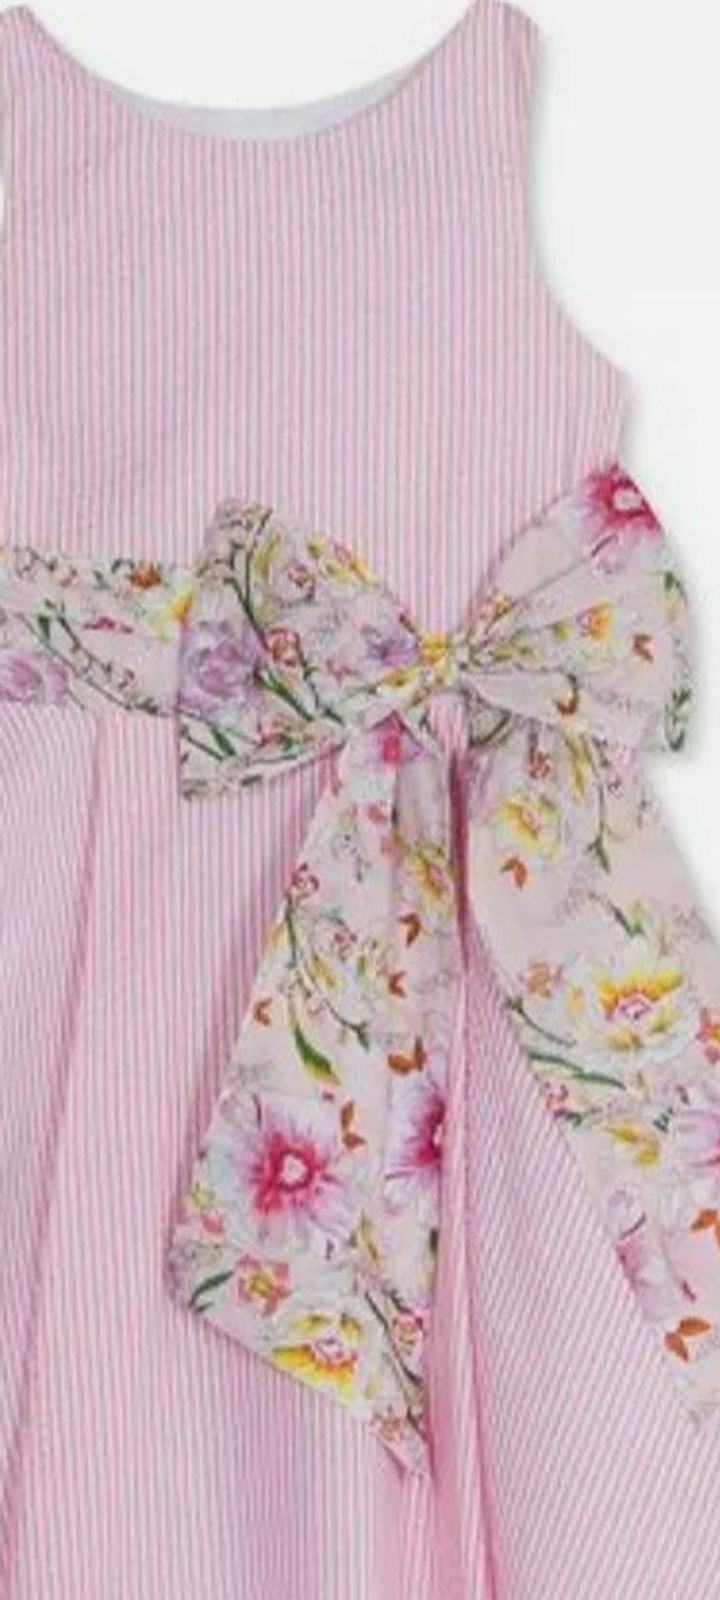 BRAND NEW Rare Editions Brand Toddler Girls Spring Easter Sleeveless Floral Dresses, Various Sizes